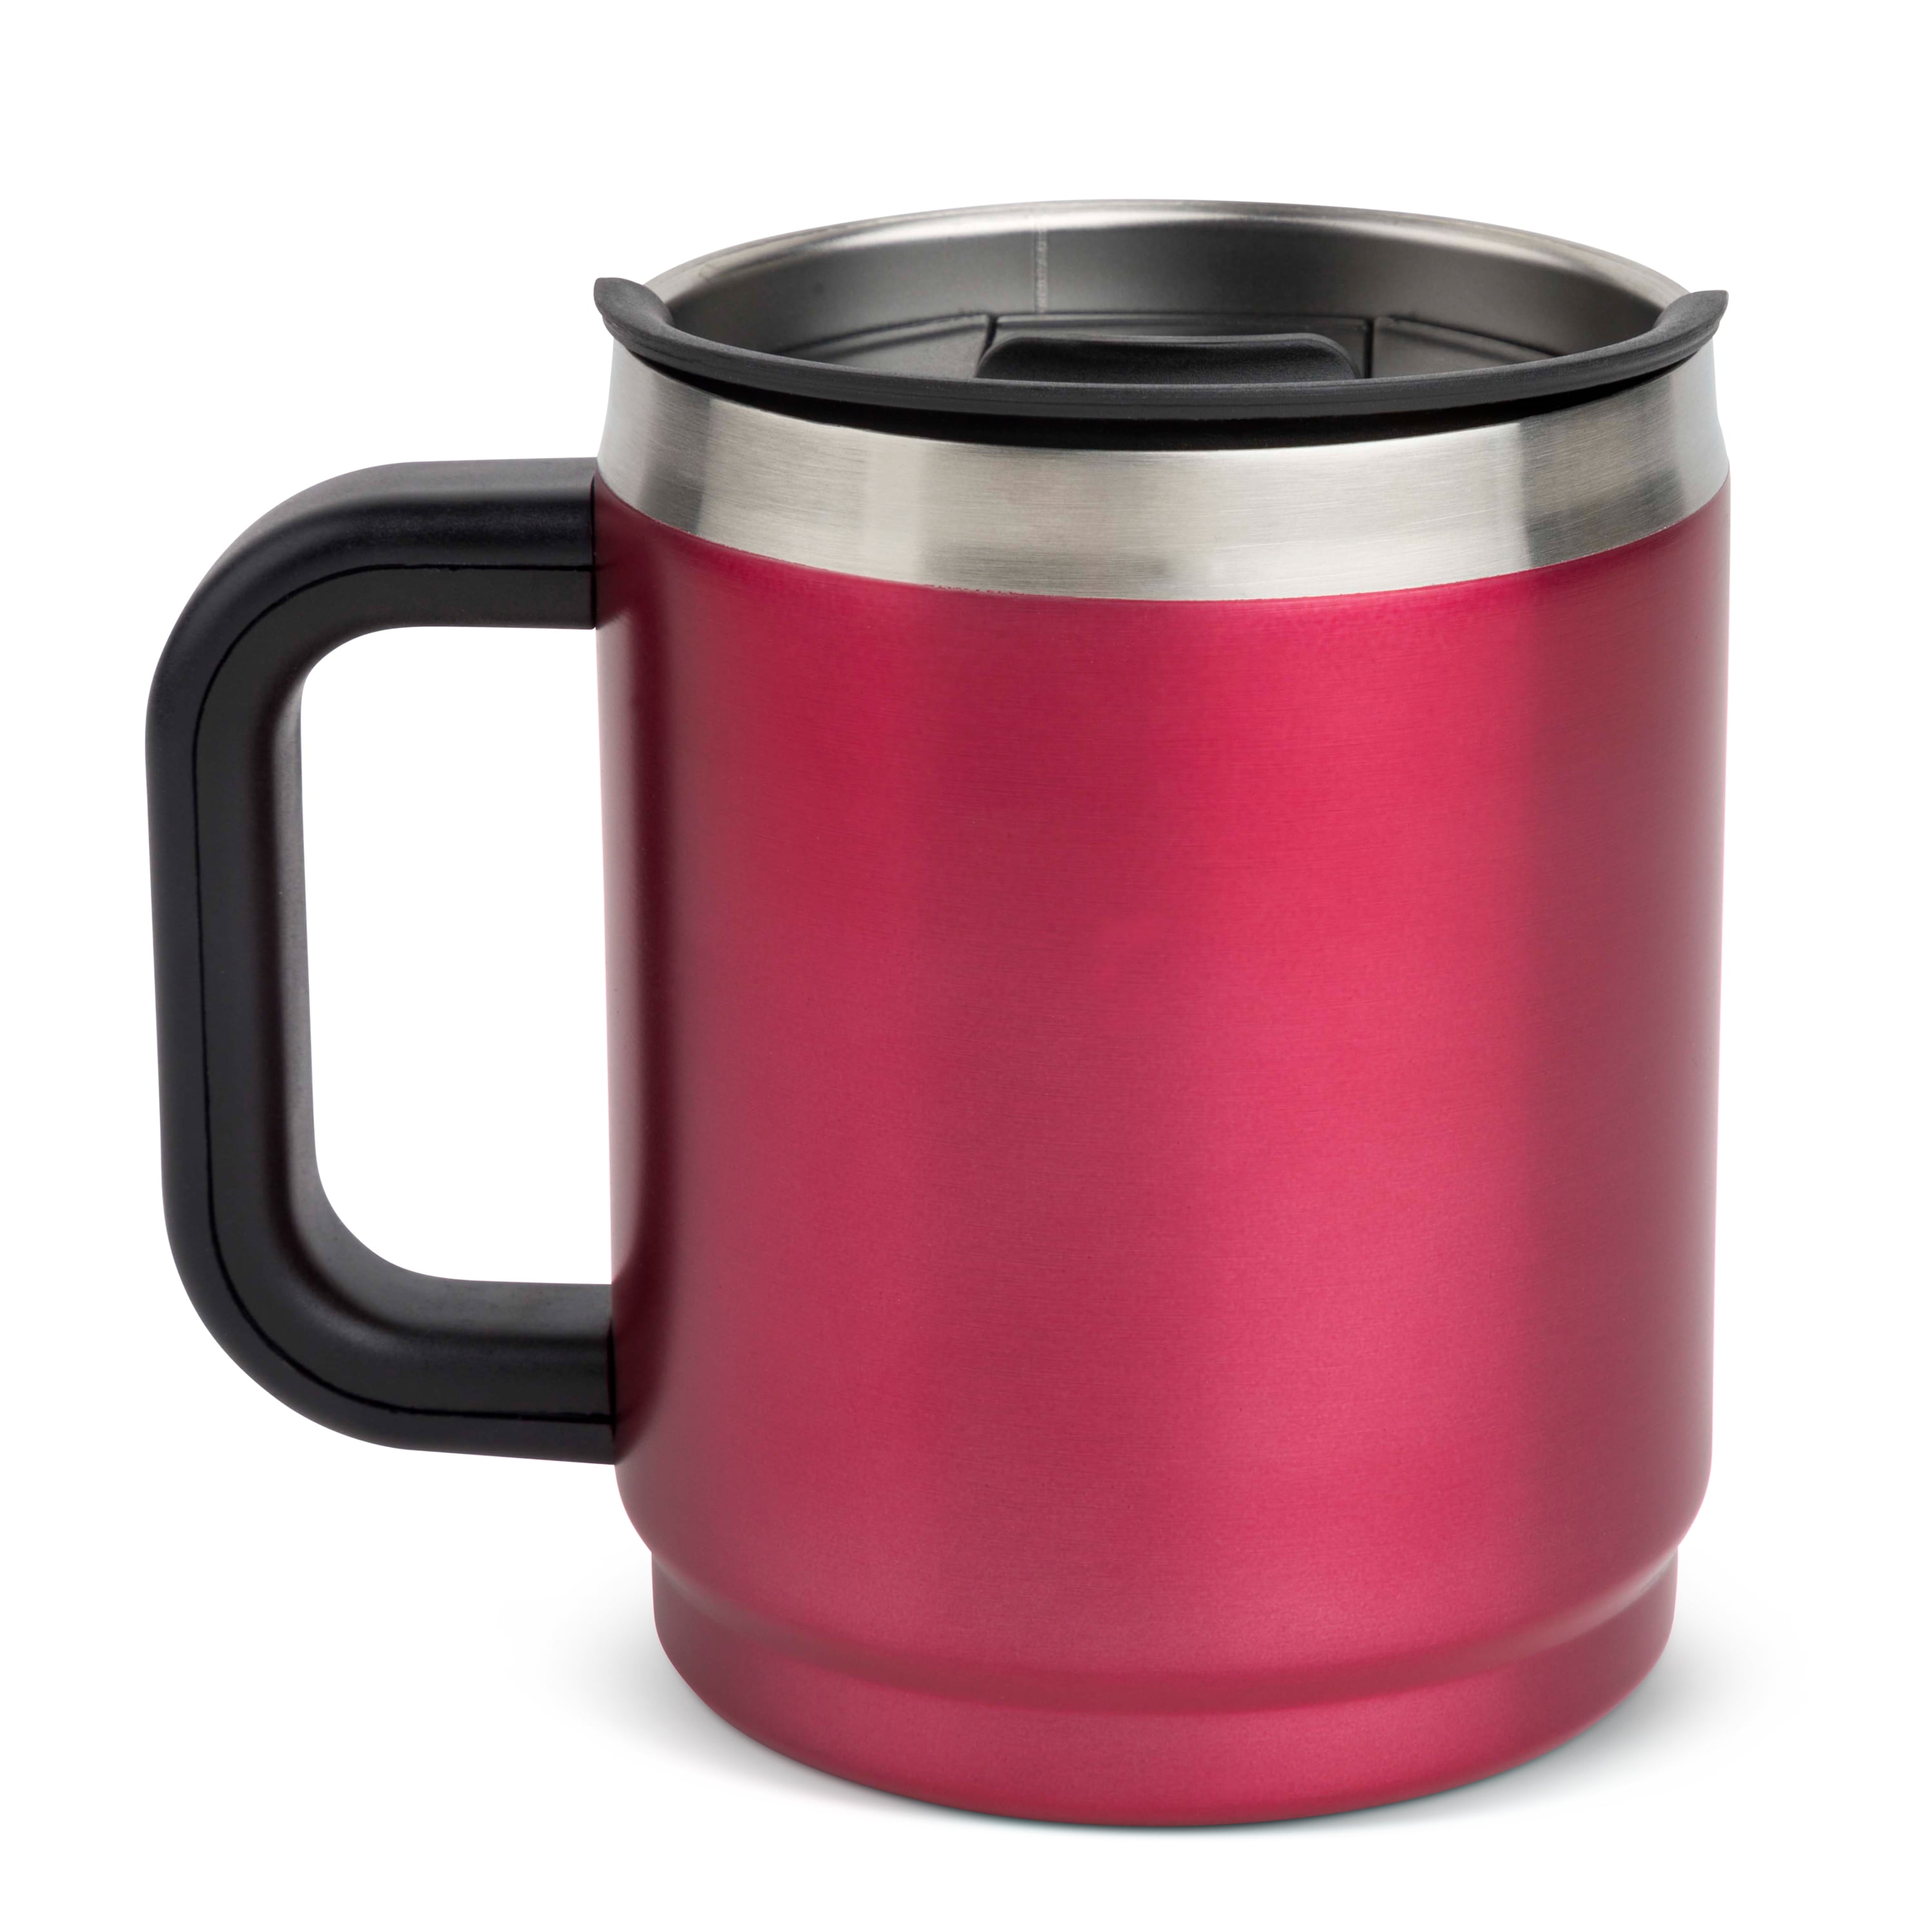 King Hoff : Stainless steel mug with handle : KH-1483